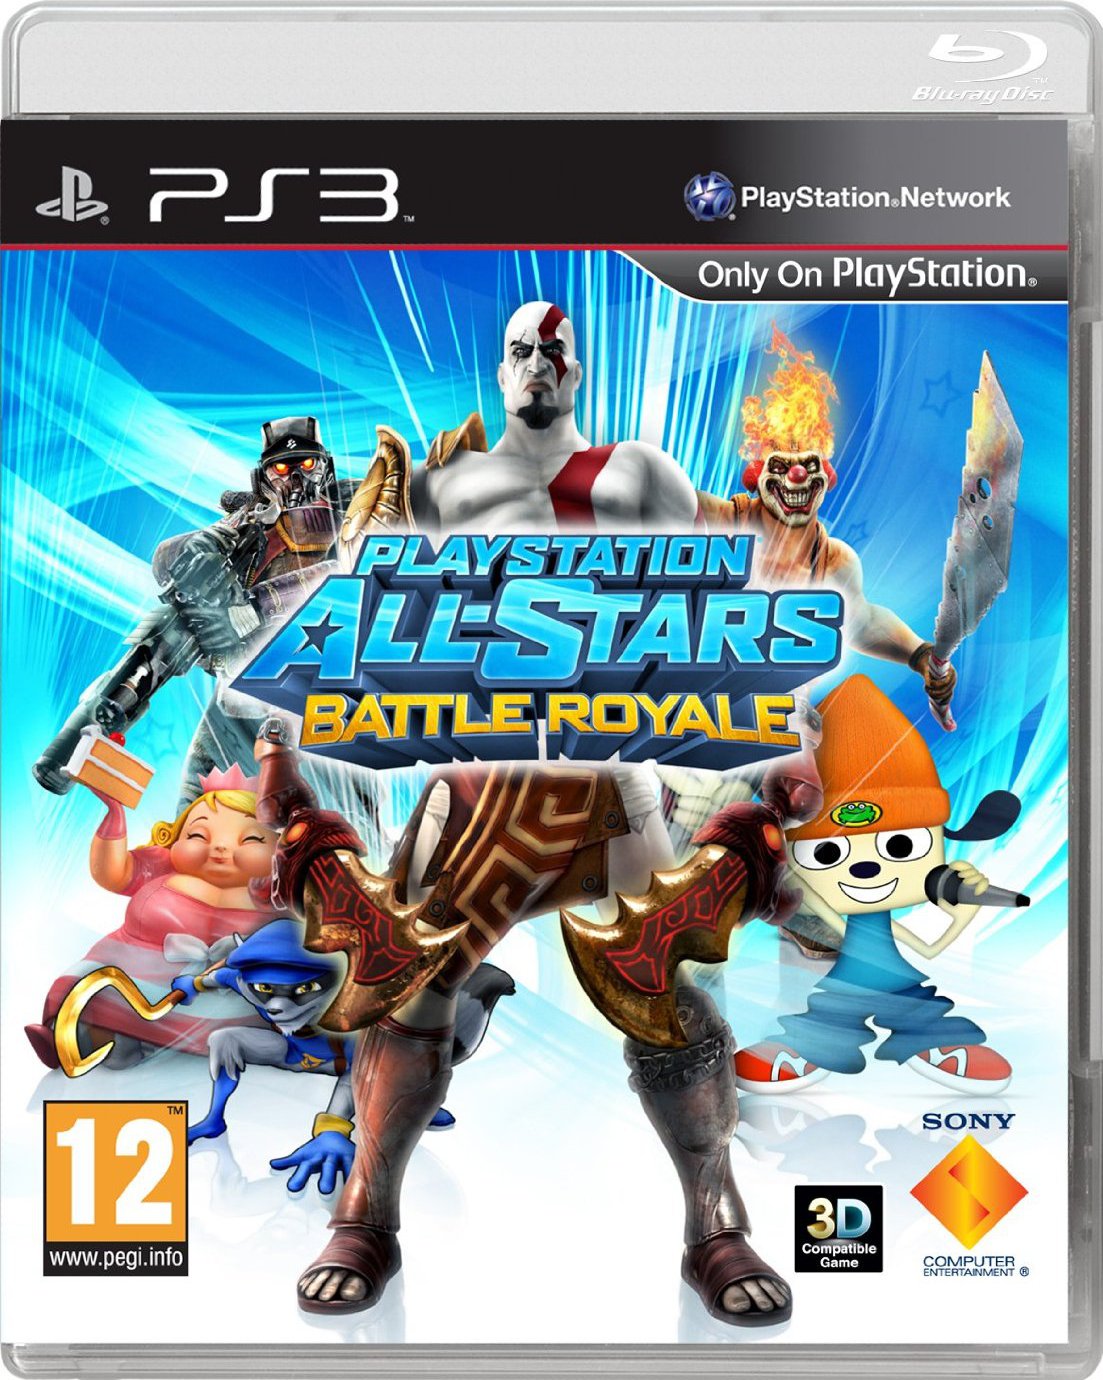 Playstation All-Stars Battle Royale - Boxart Europeia